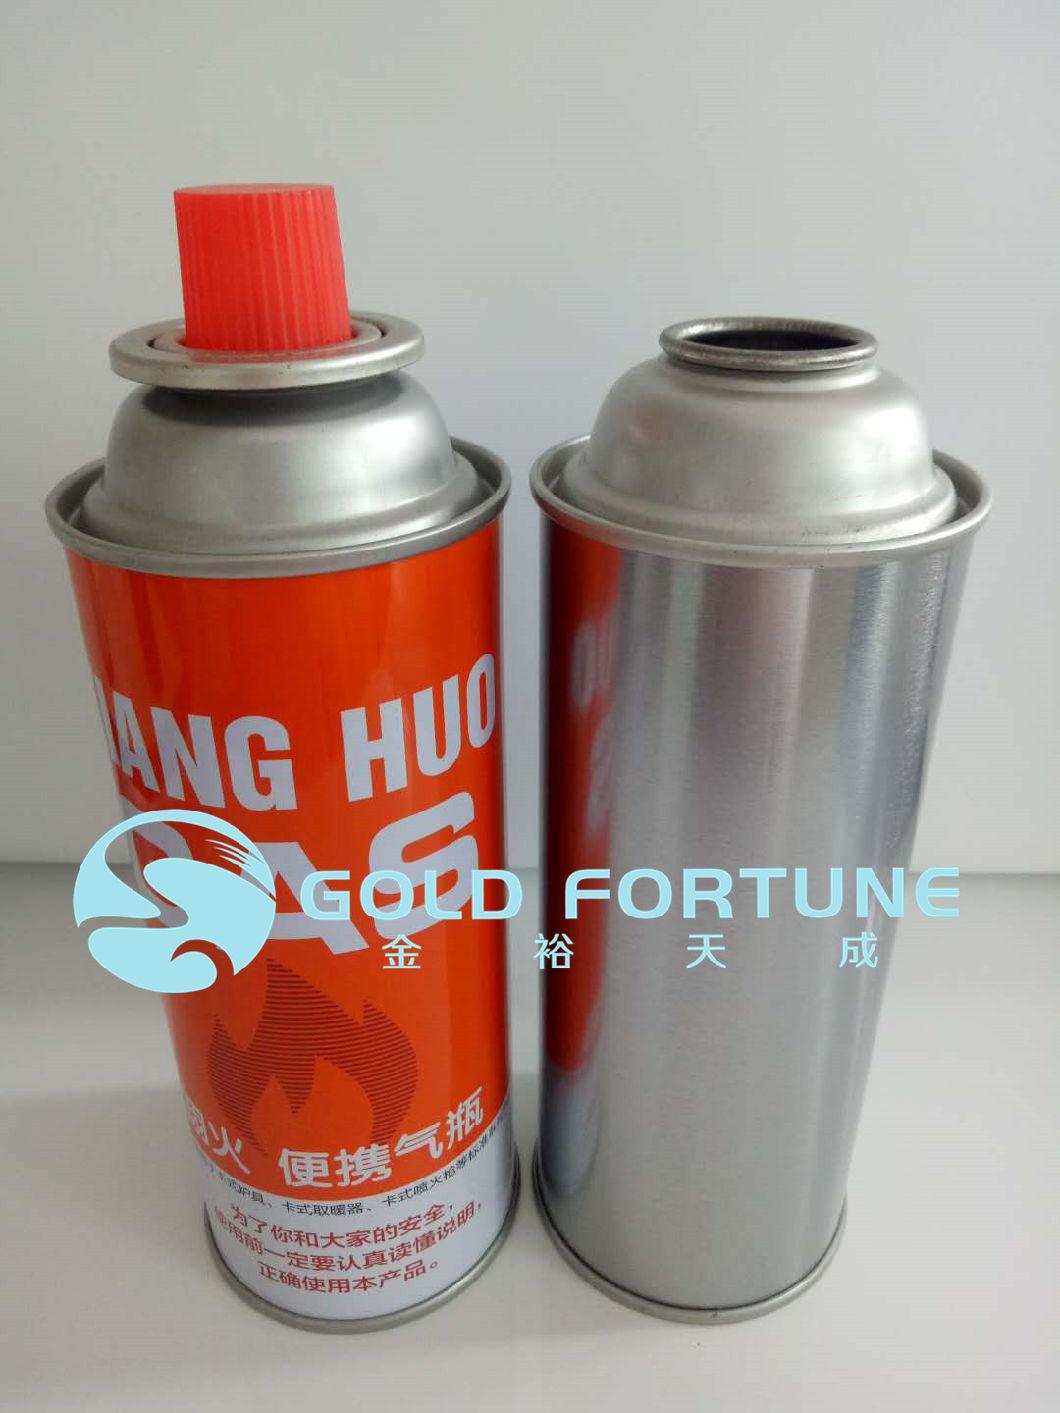 Metal Tinplate Butane Gas Stove Refill Aerosol Cans